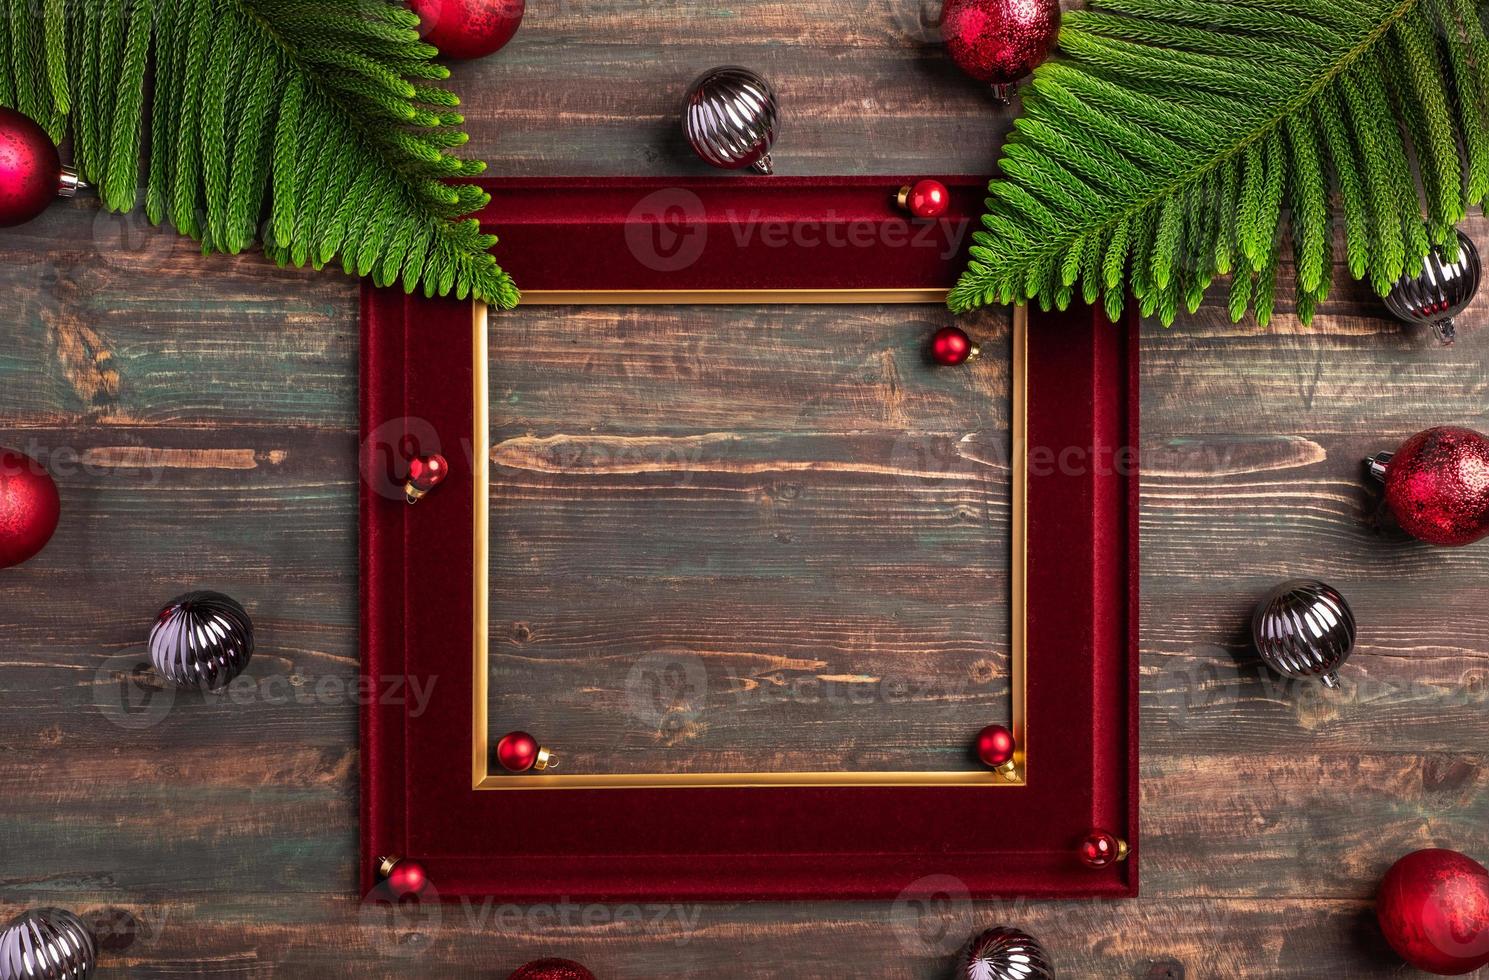 kerst rode fotolijst met dennenblad en snuisterij decor op houten tafel foto